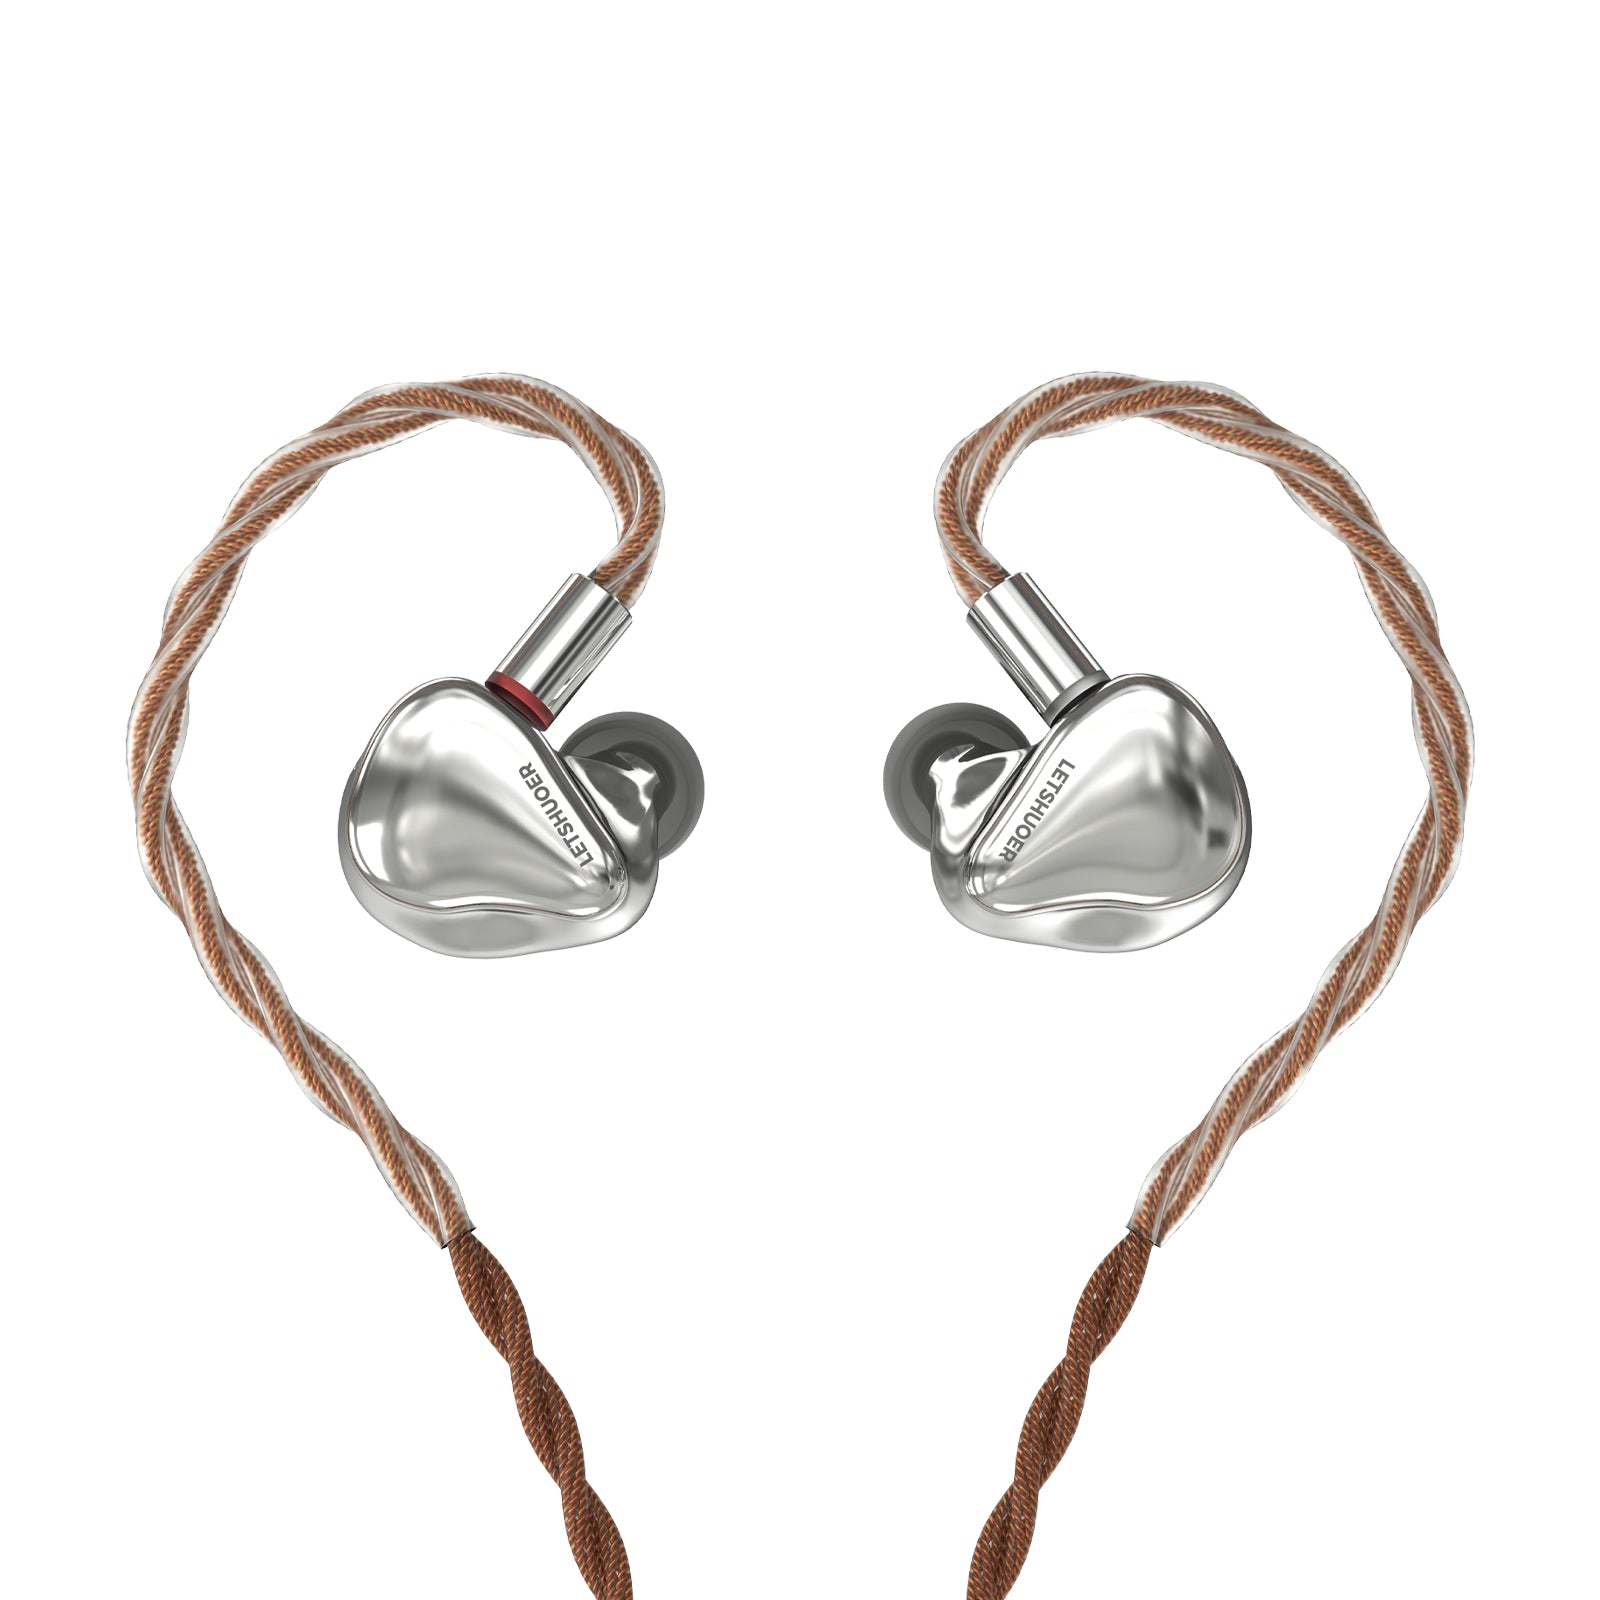 LETSHUOER Cadenza flagship 12 hybrid drivers in-ear headphones